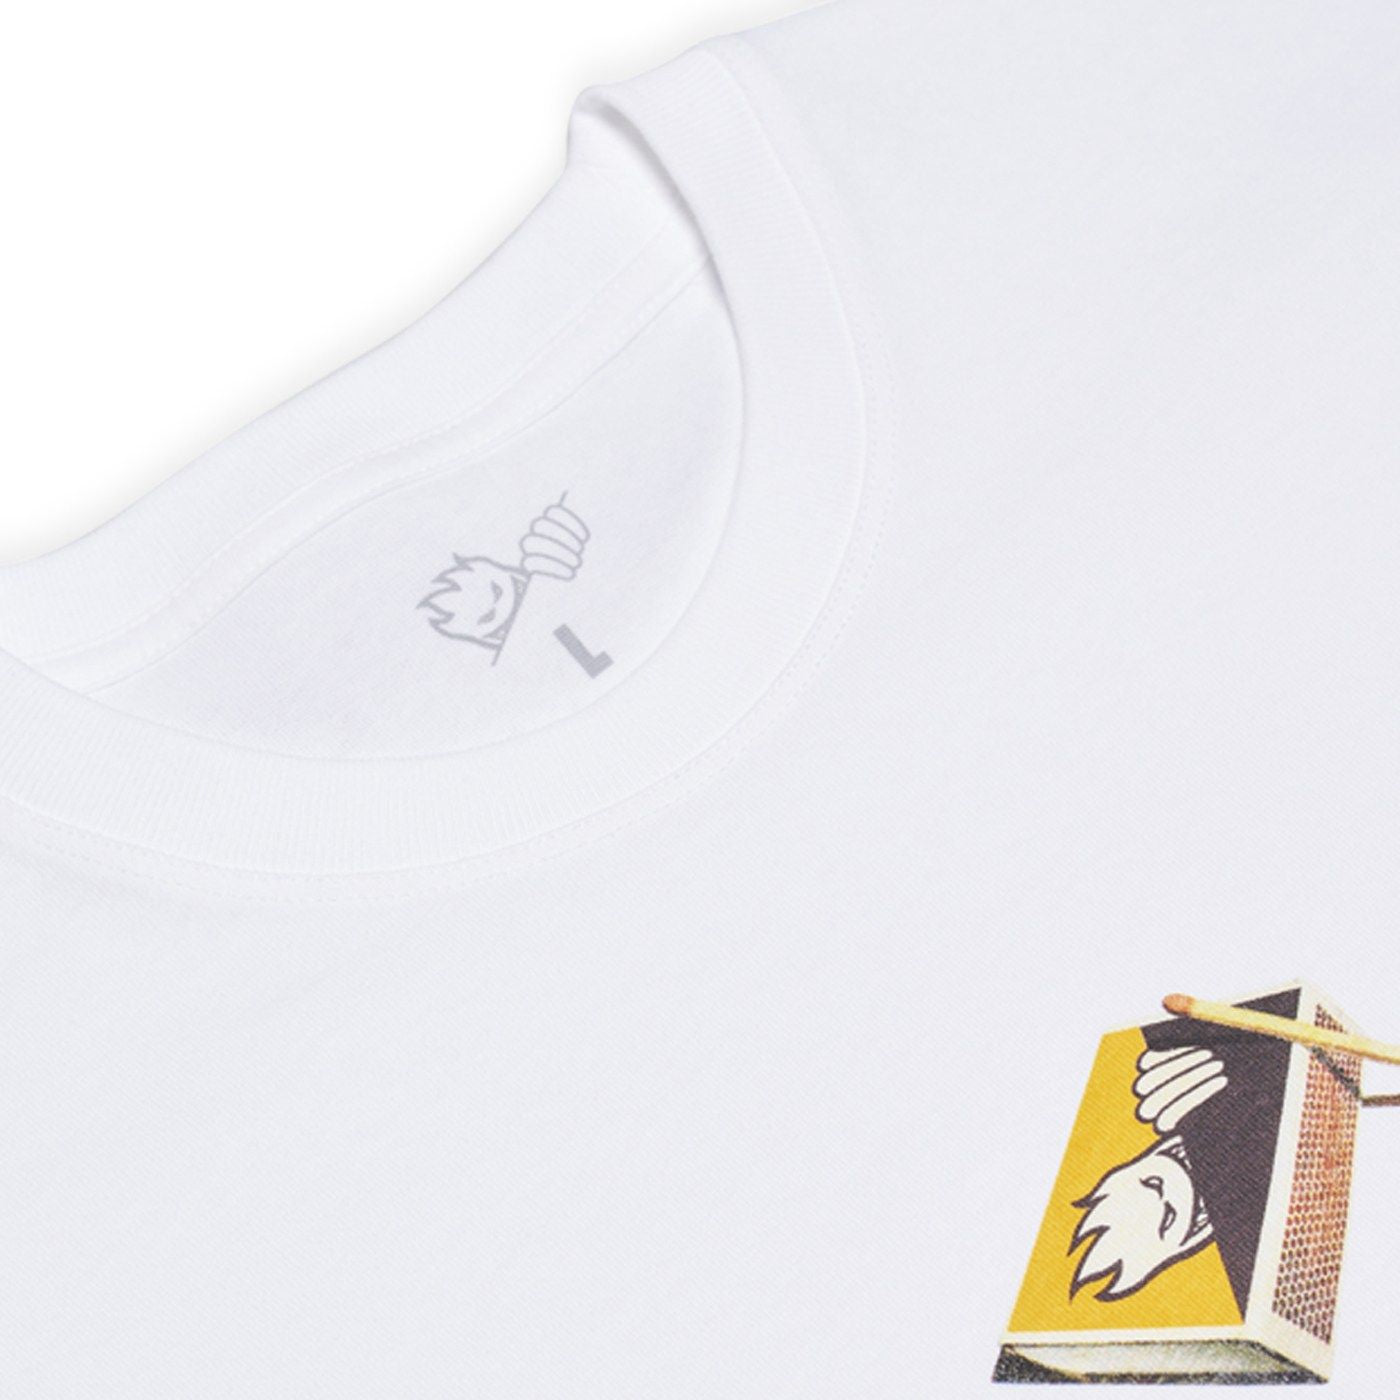 Last Resort AB X Spitfire Matchbox T Shirt - White